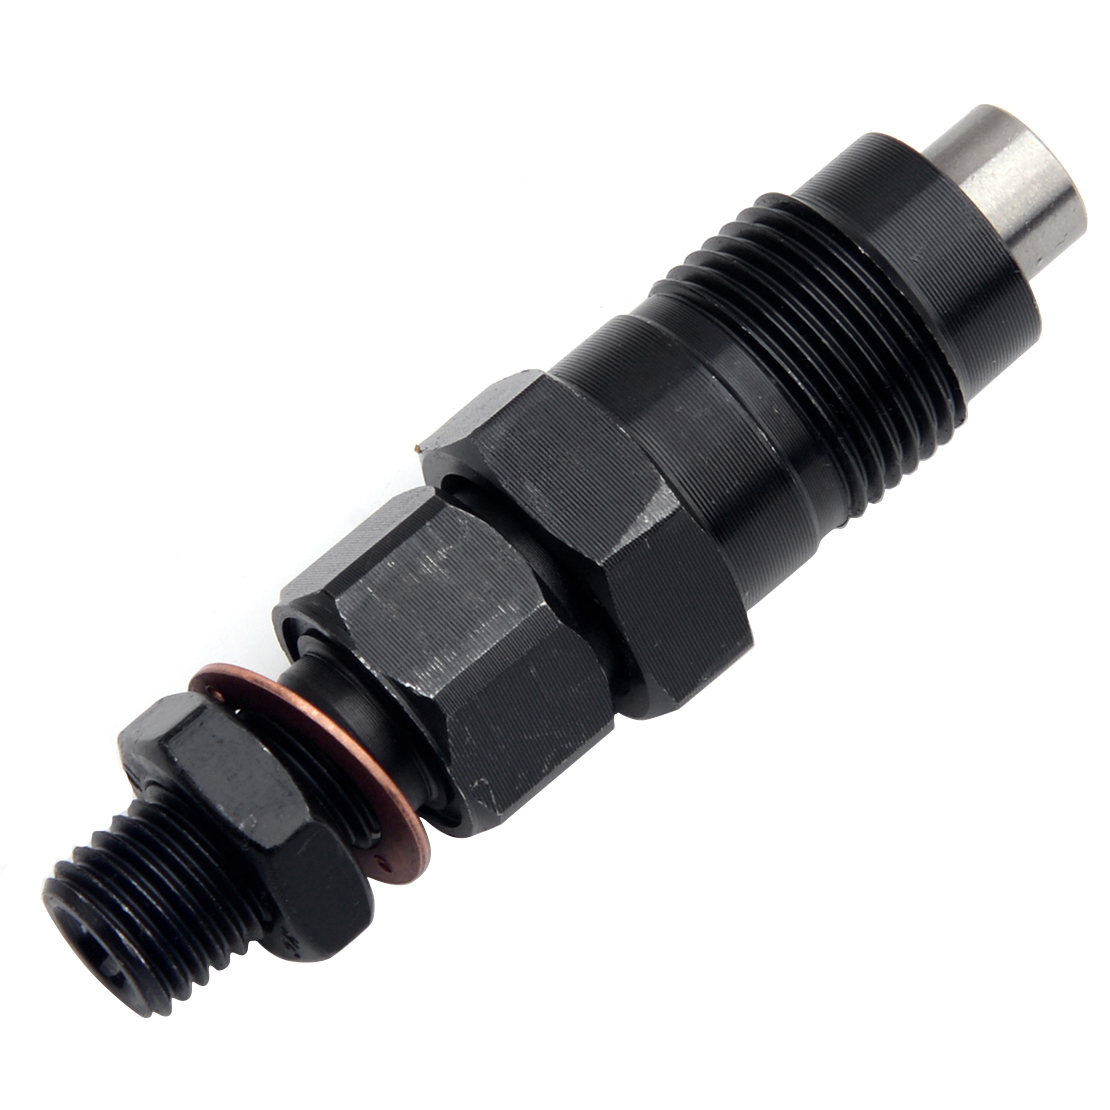 Black Car Fuel Injection Valve Nozzle YM11951553001 Accessories fit for Yanmar 2YM15 3YM30 Engine YM119515-53001